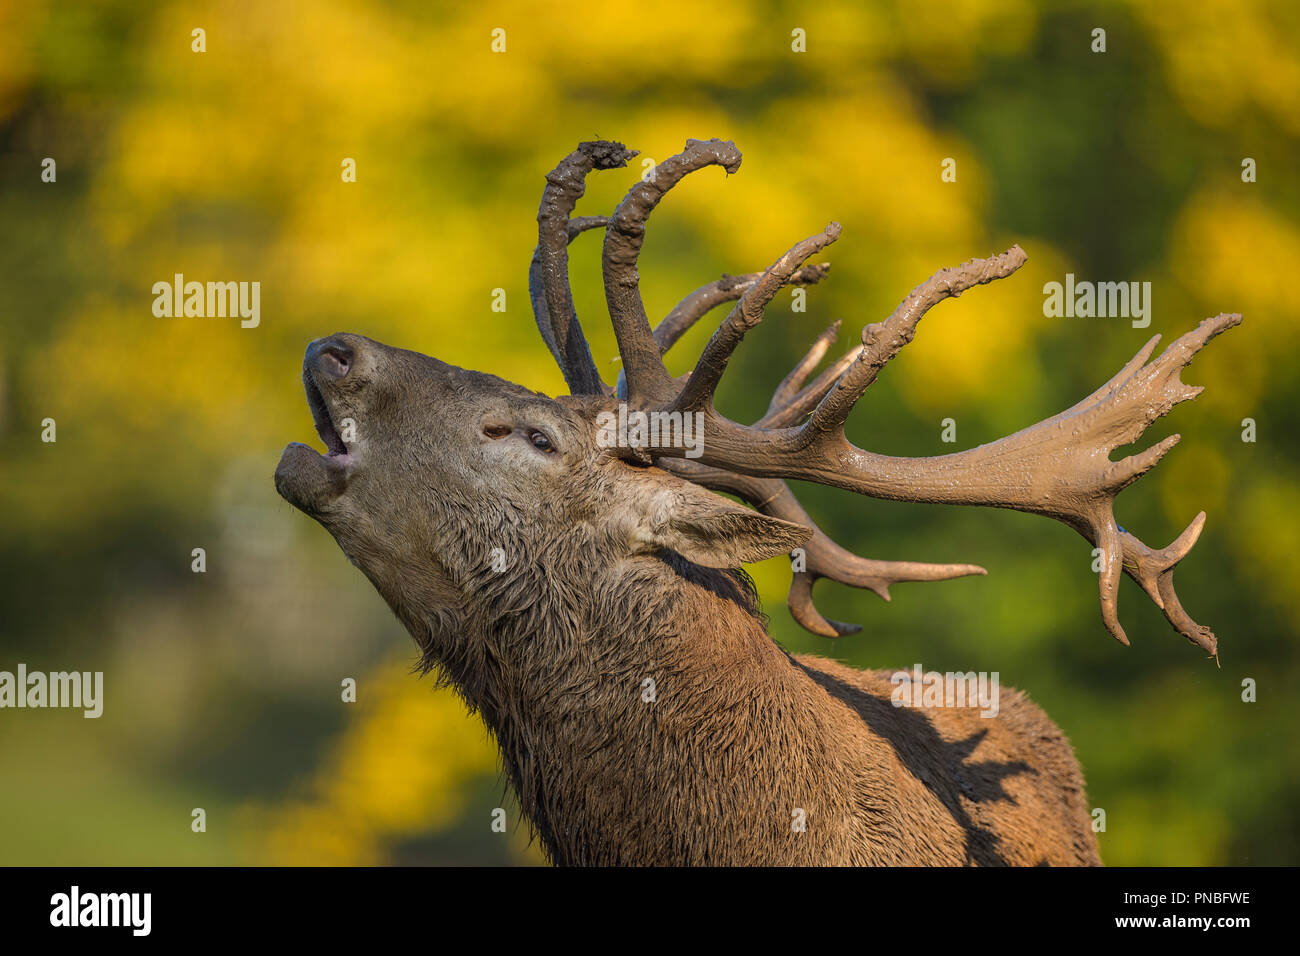 Red deer, Cervus elaphus, Portrait, Male Roaring, in Rutting Season, Europe Stock Photo